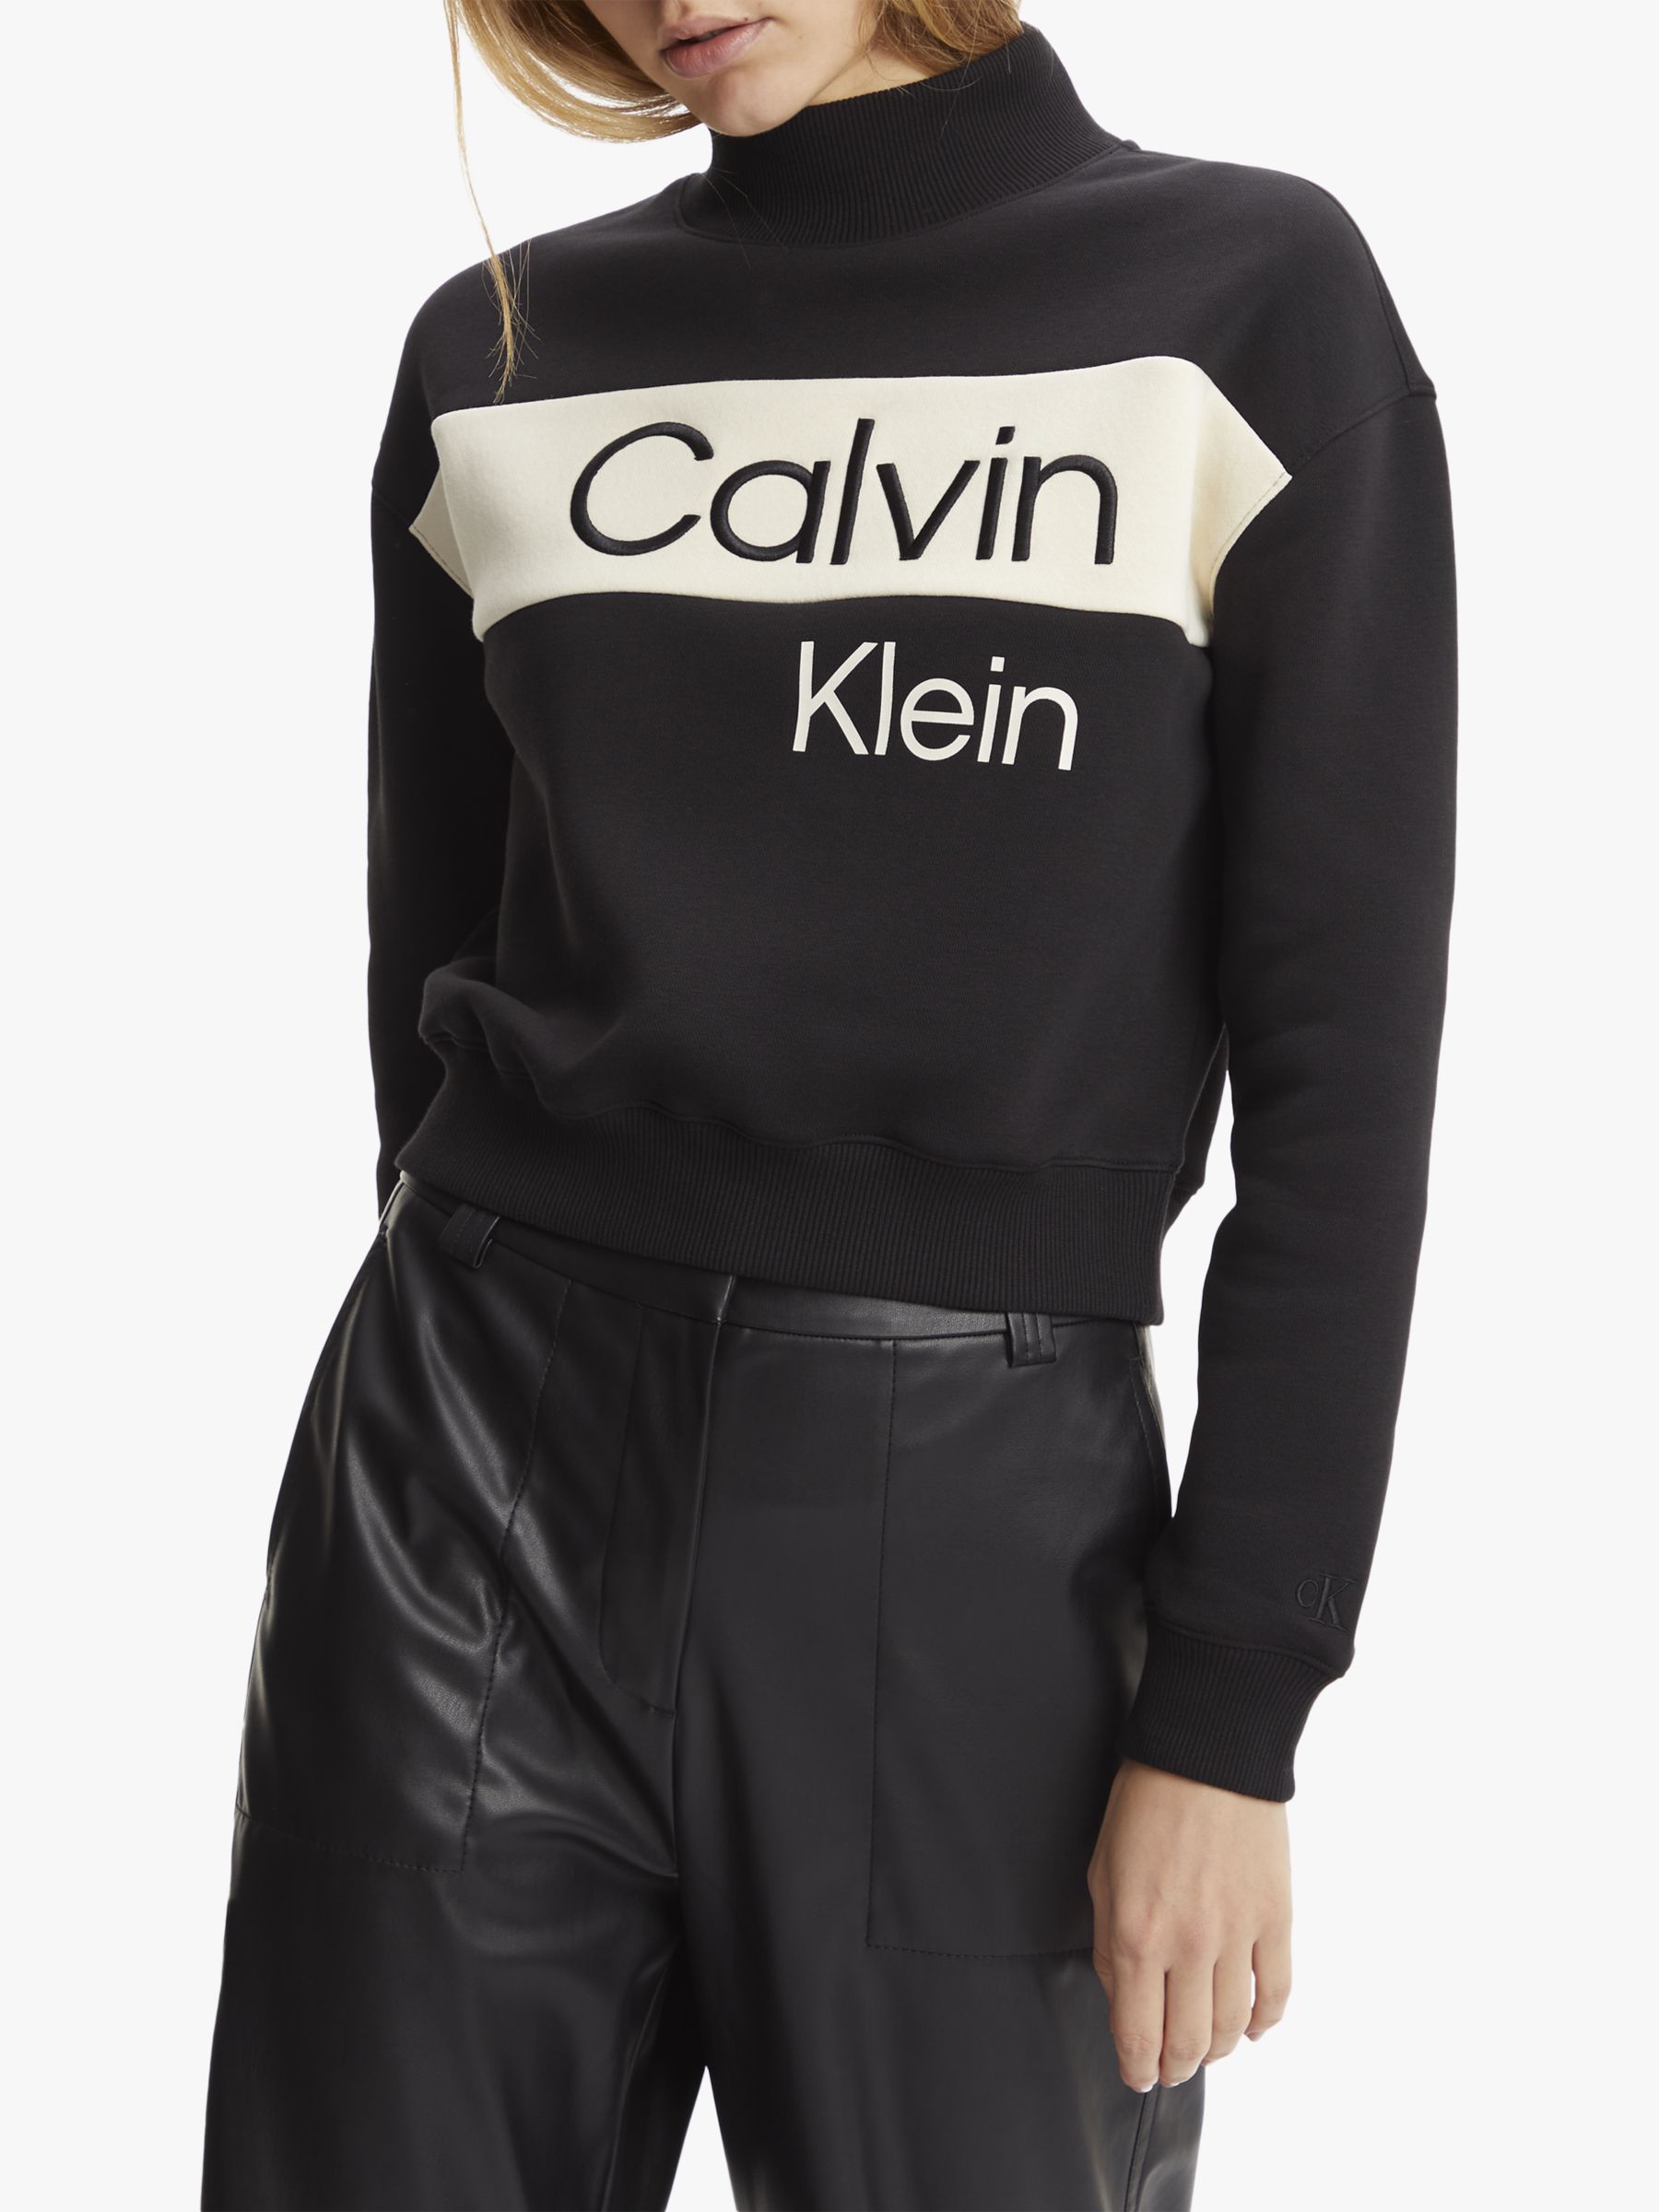 Calvin Klein Colour Block Mock Neck Sweatshirt, CK Black